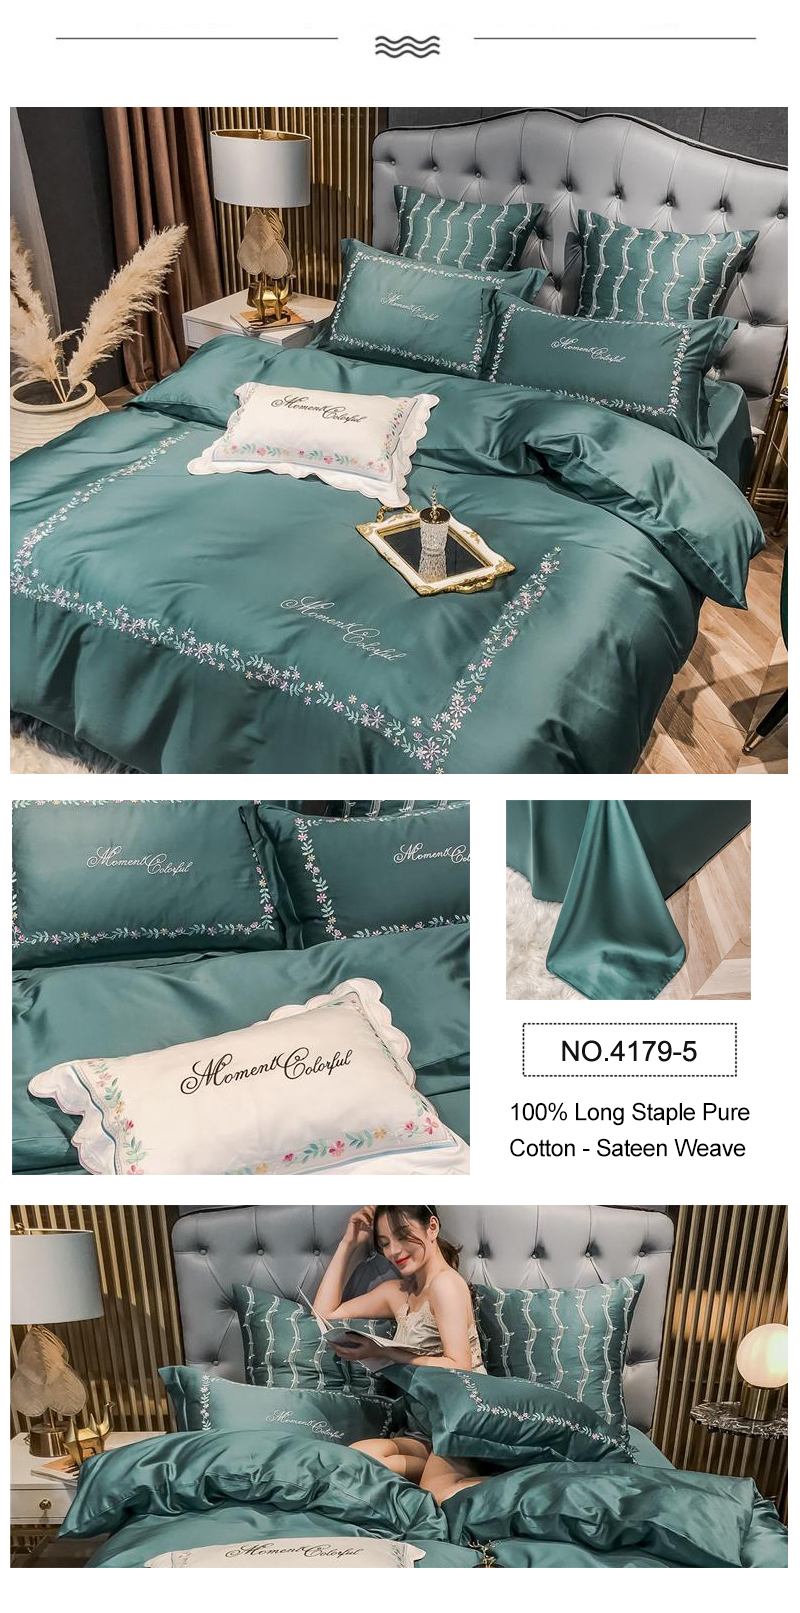 Softness 100% Long Staple Cotton Bedding Set